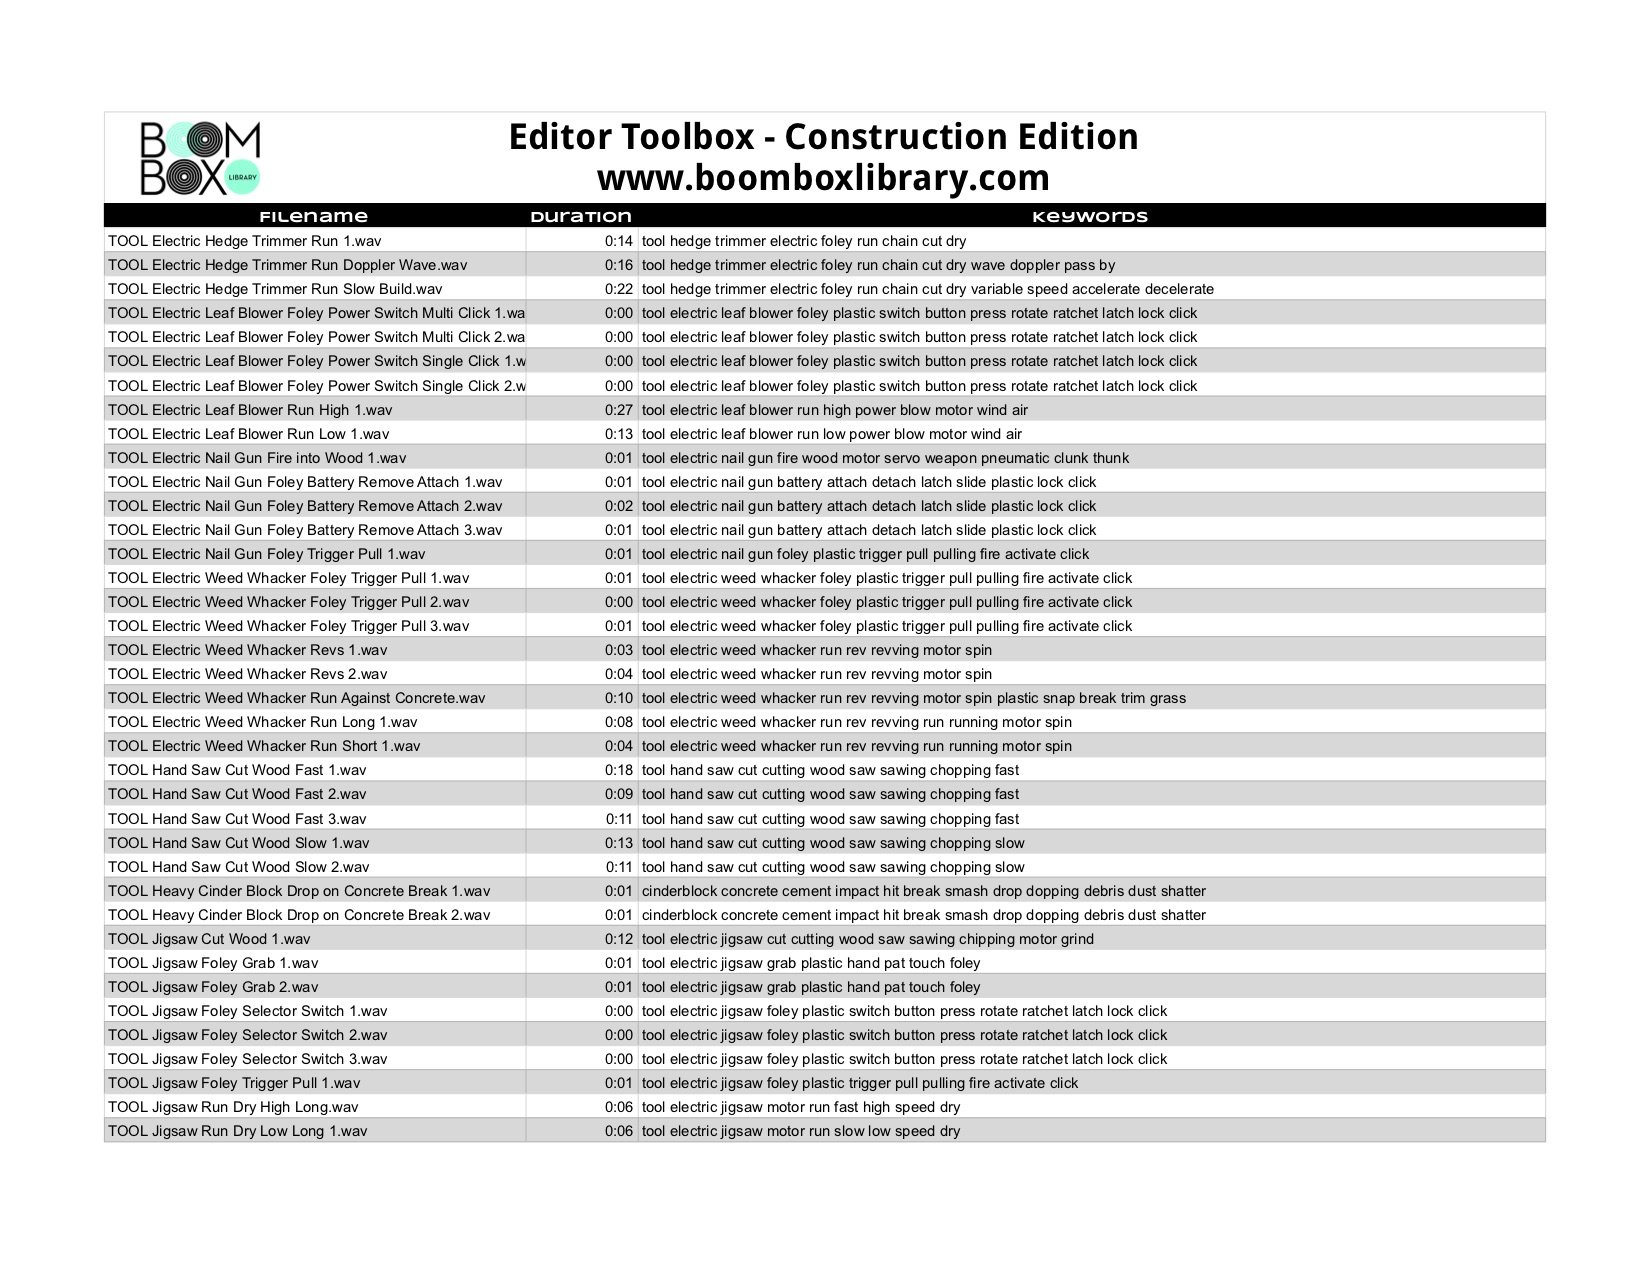 Boom Box Library - Editor Toolbox - Construction Edition - Metadata -JPG PG 2.jpg